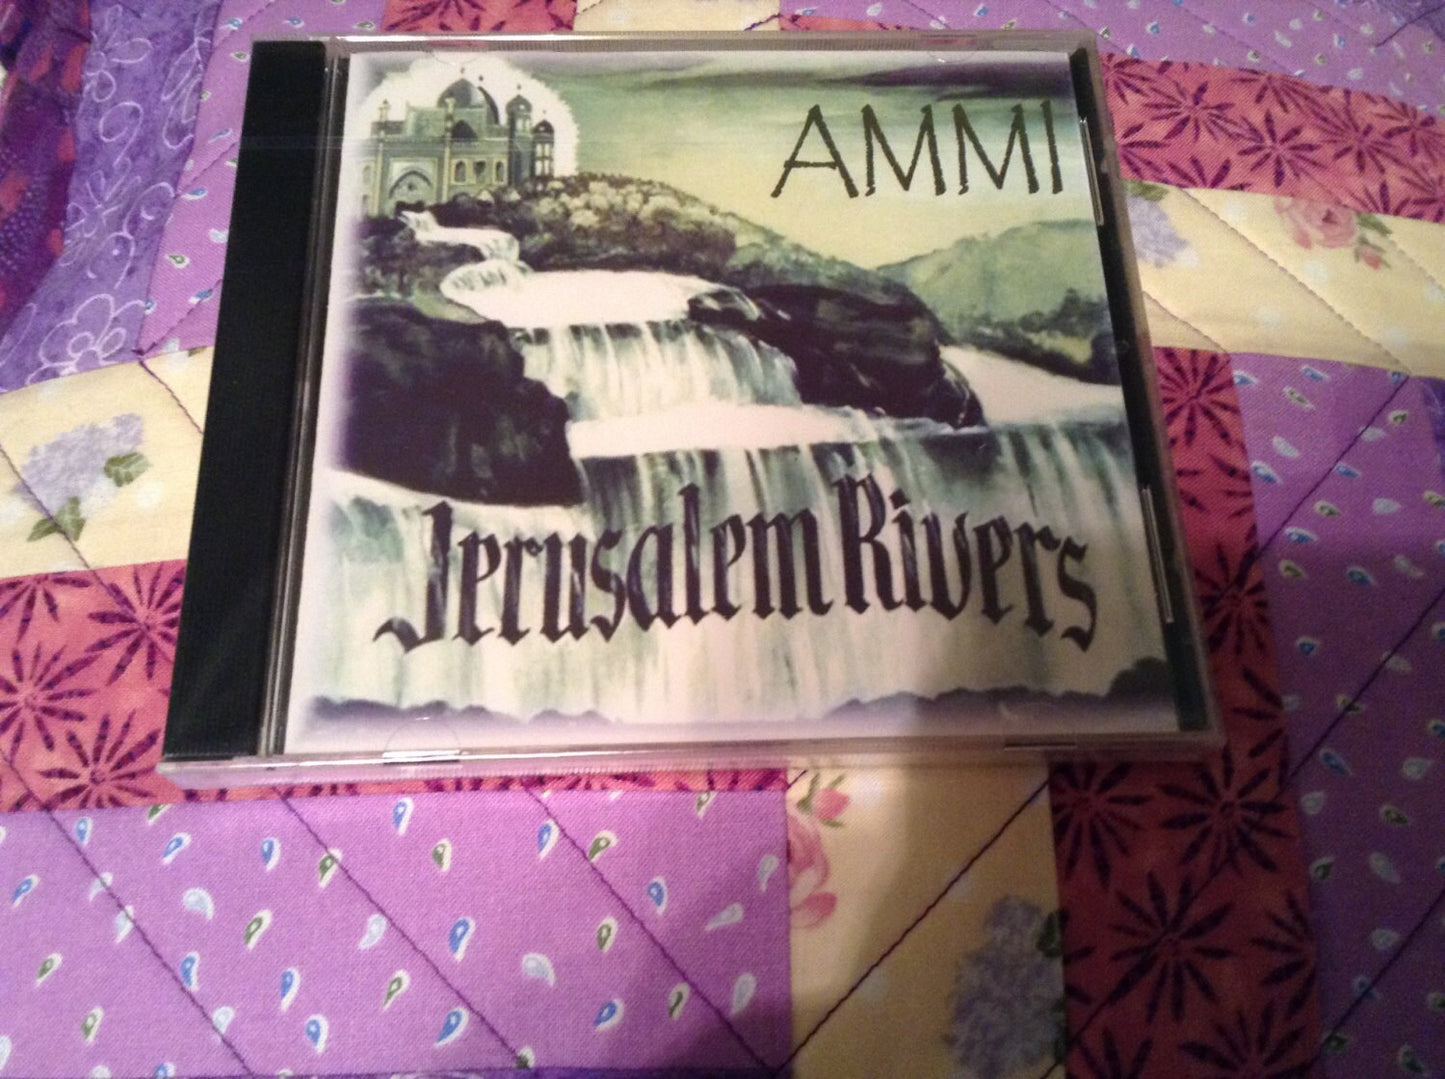 AMI-JERUSALEM RIVERS-Ron and Jean Amodea